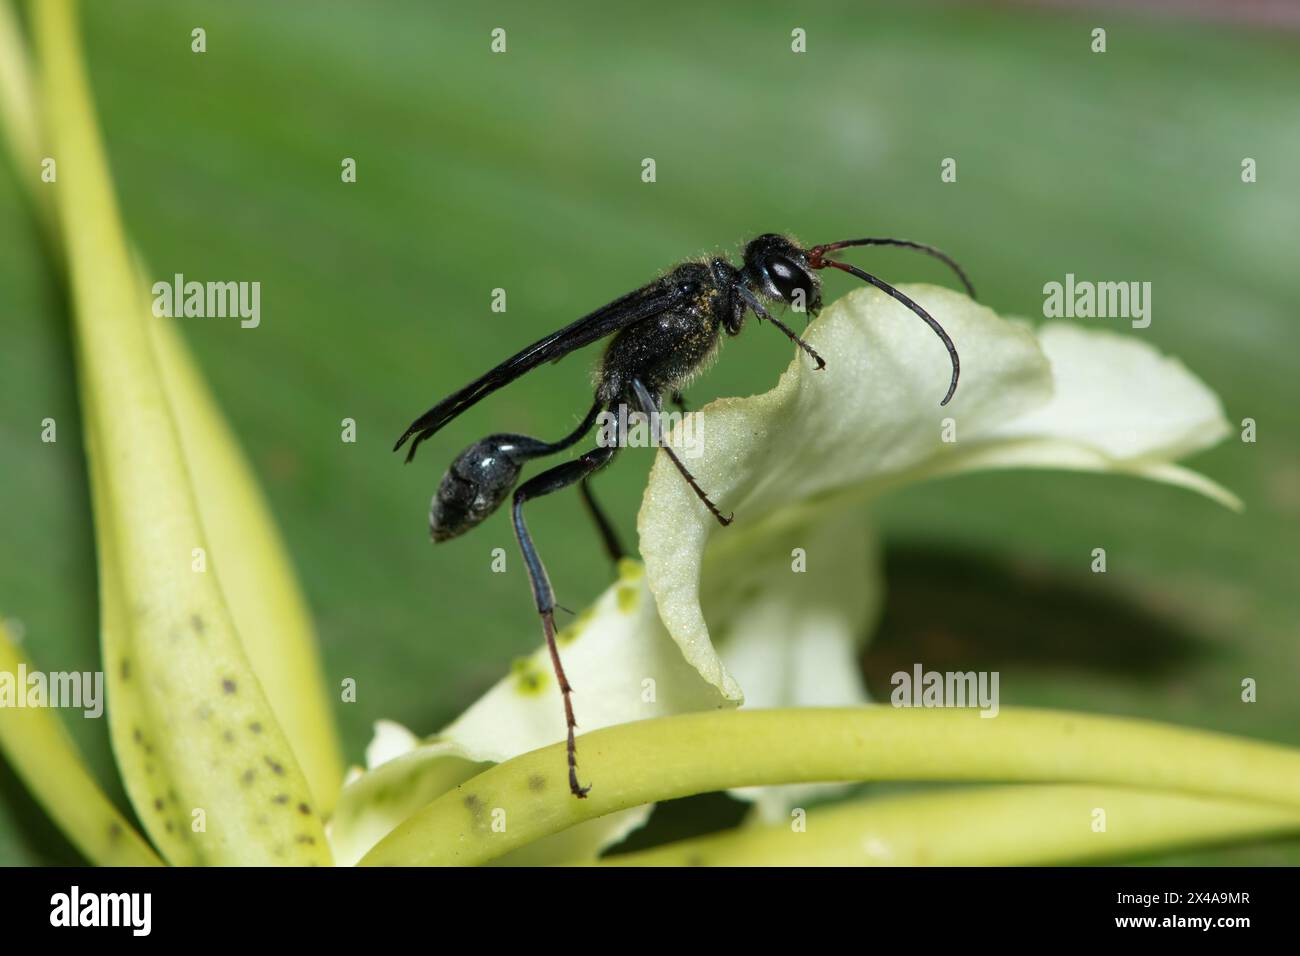 Blue Mud-dauber Wasp (Chalybion) pollinating a brassia flower Stock Photo